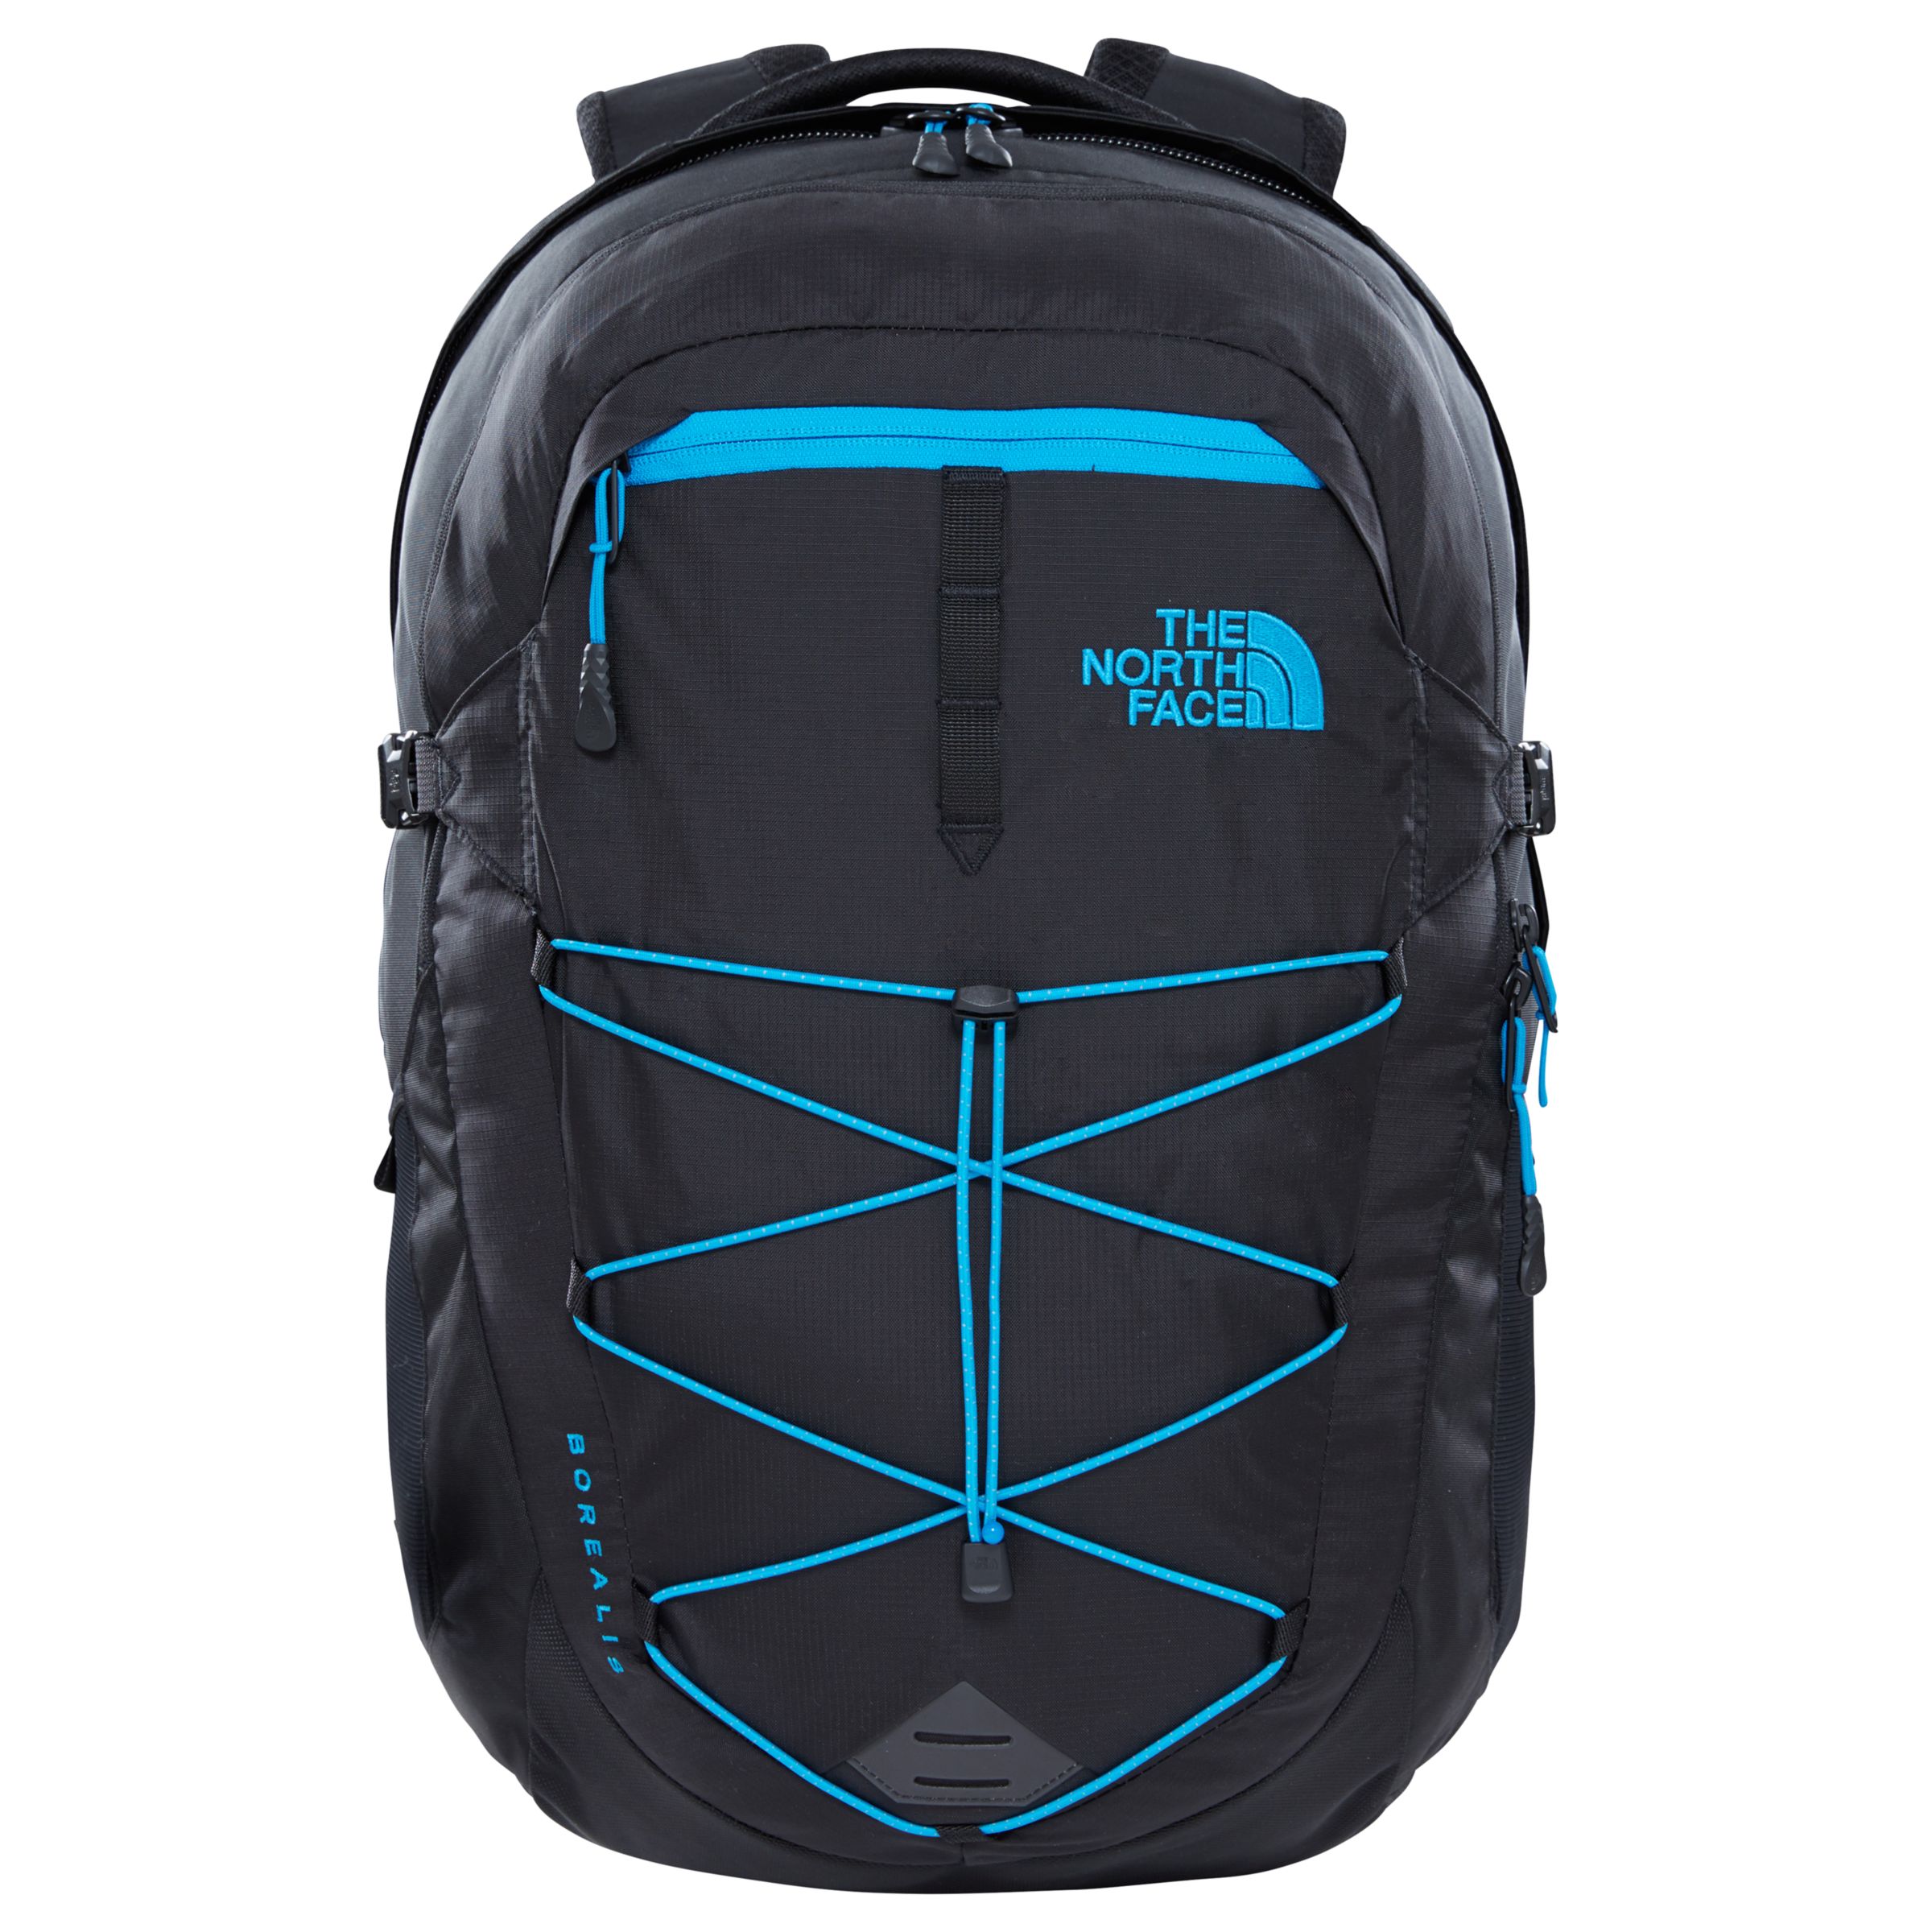 The North Face Borealis Backpack Black Blue At John Lewis Partners